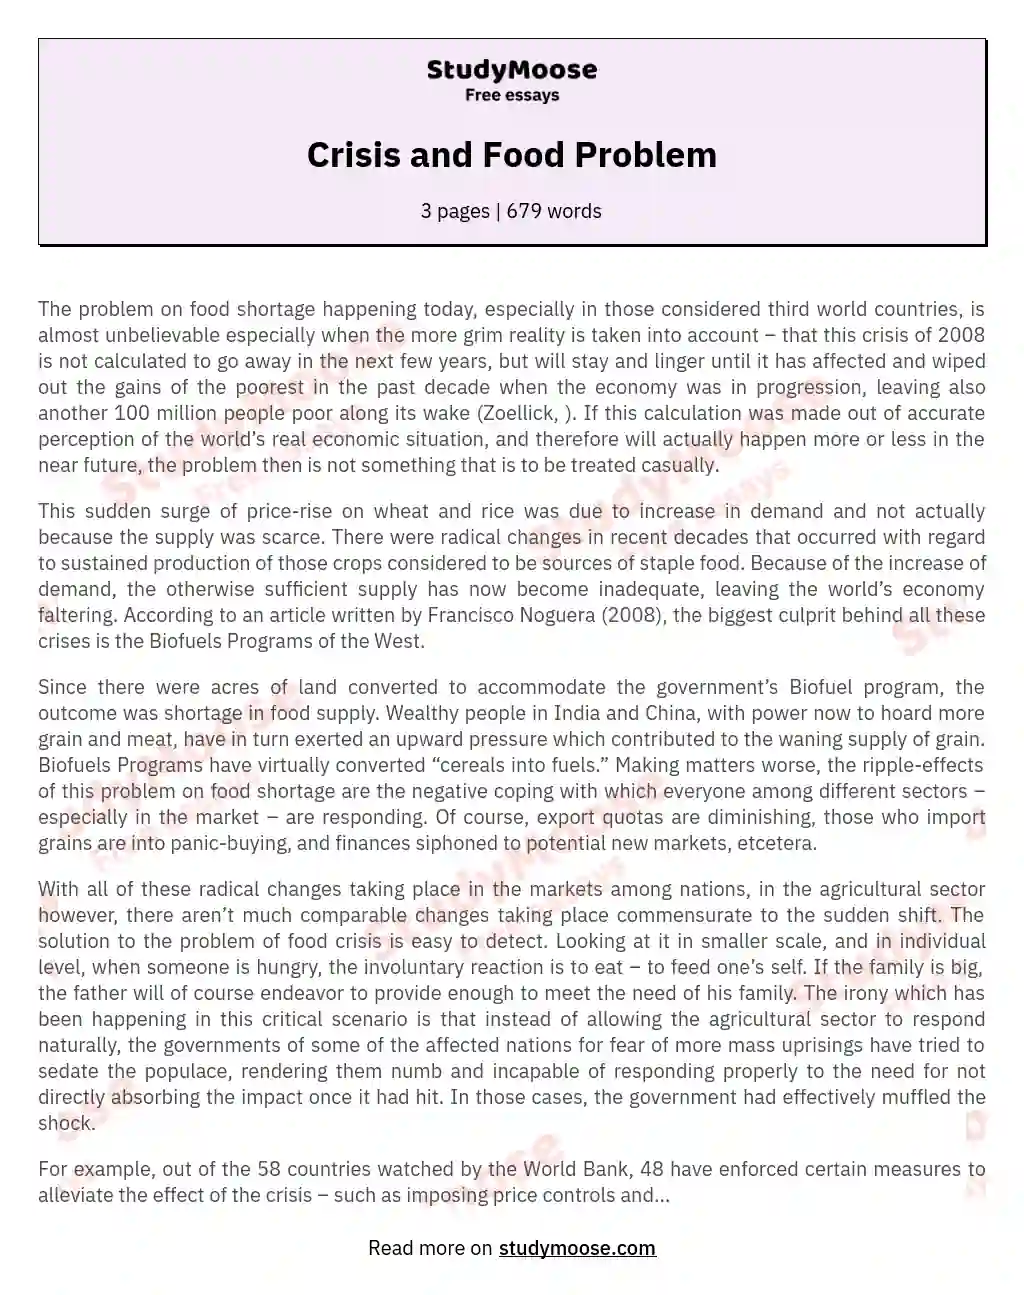 essay on the food crisis